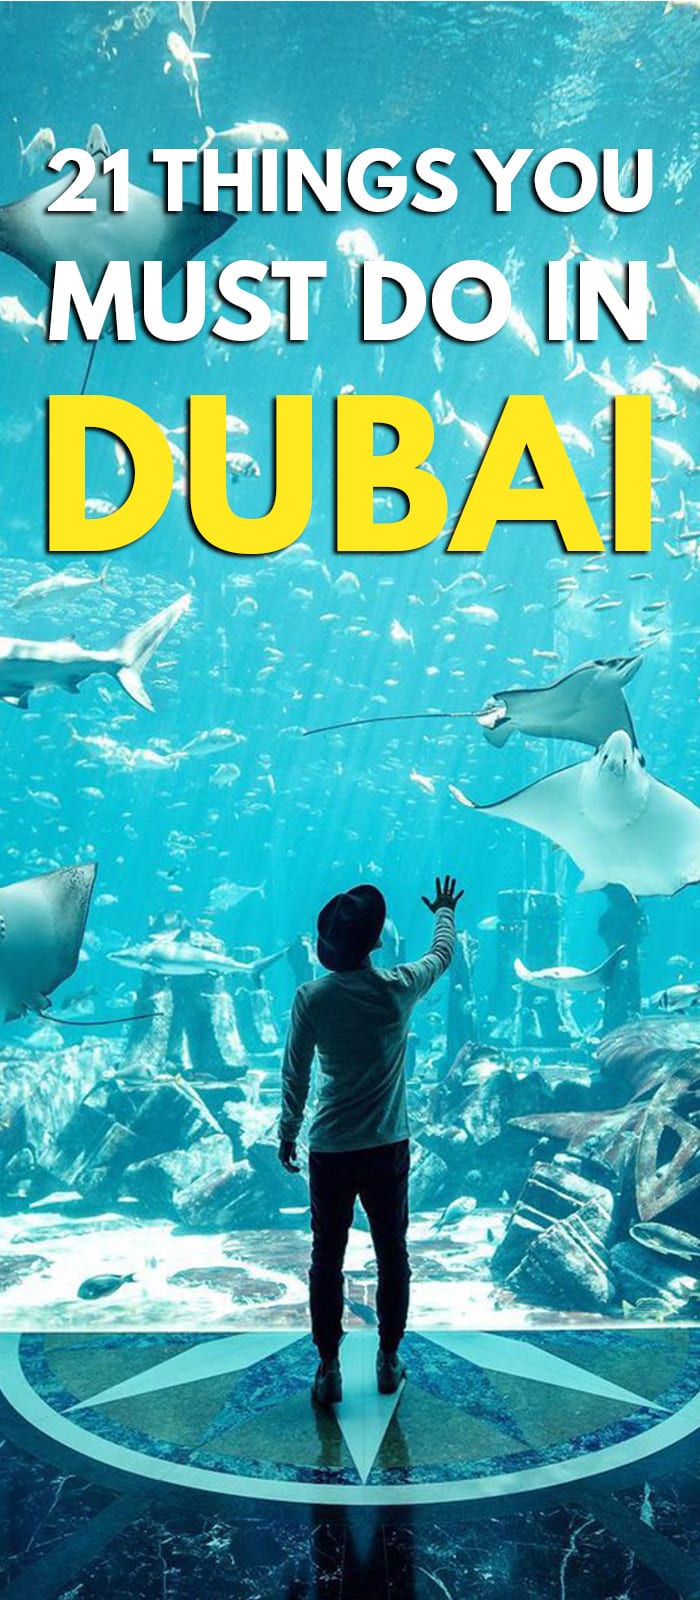 dubai mall aquarium - entry fees online booking package